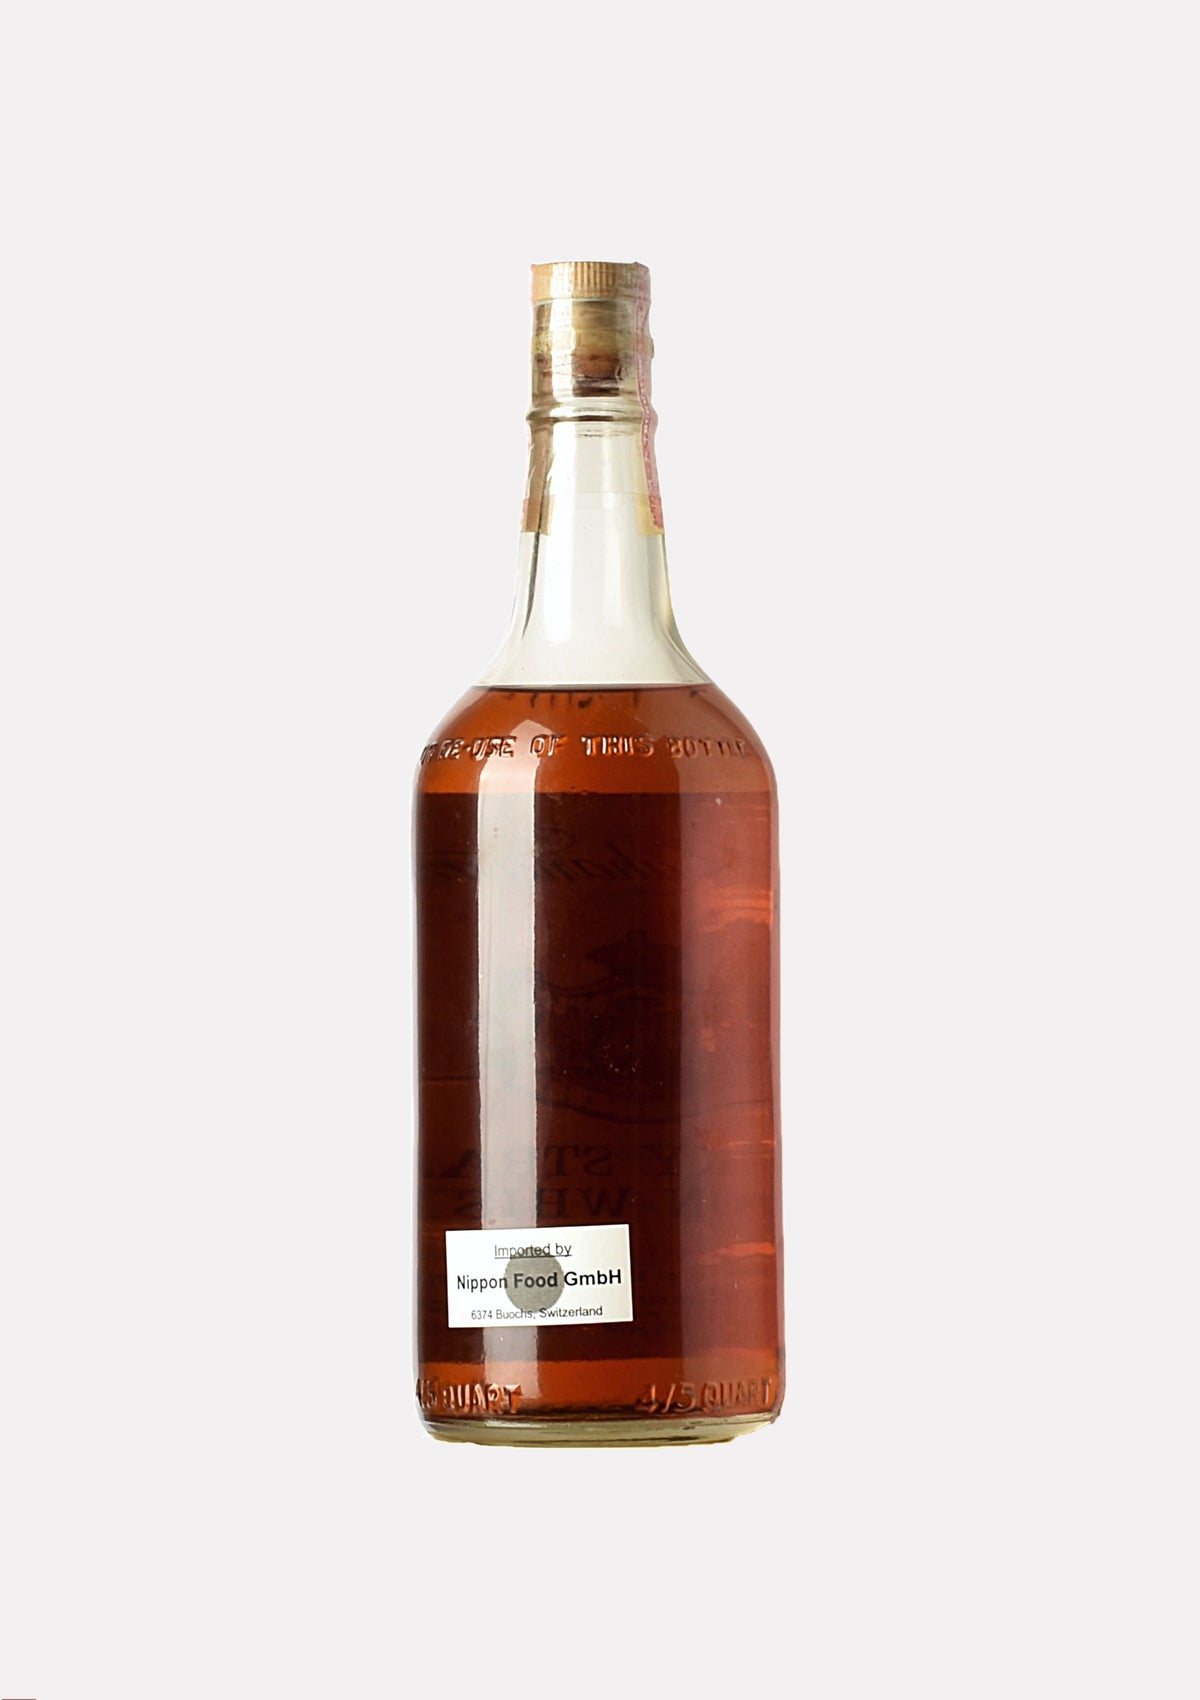 Duke Kahanamoku`s Private Stock Kentucky Straight Bourbon Whiskey